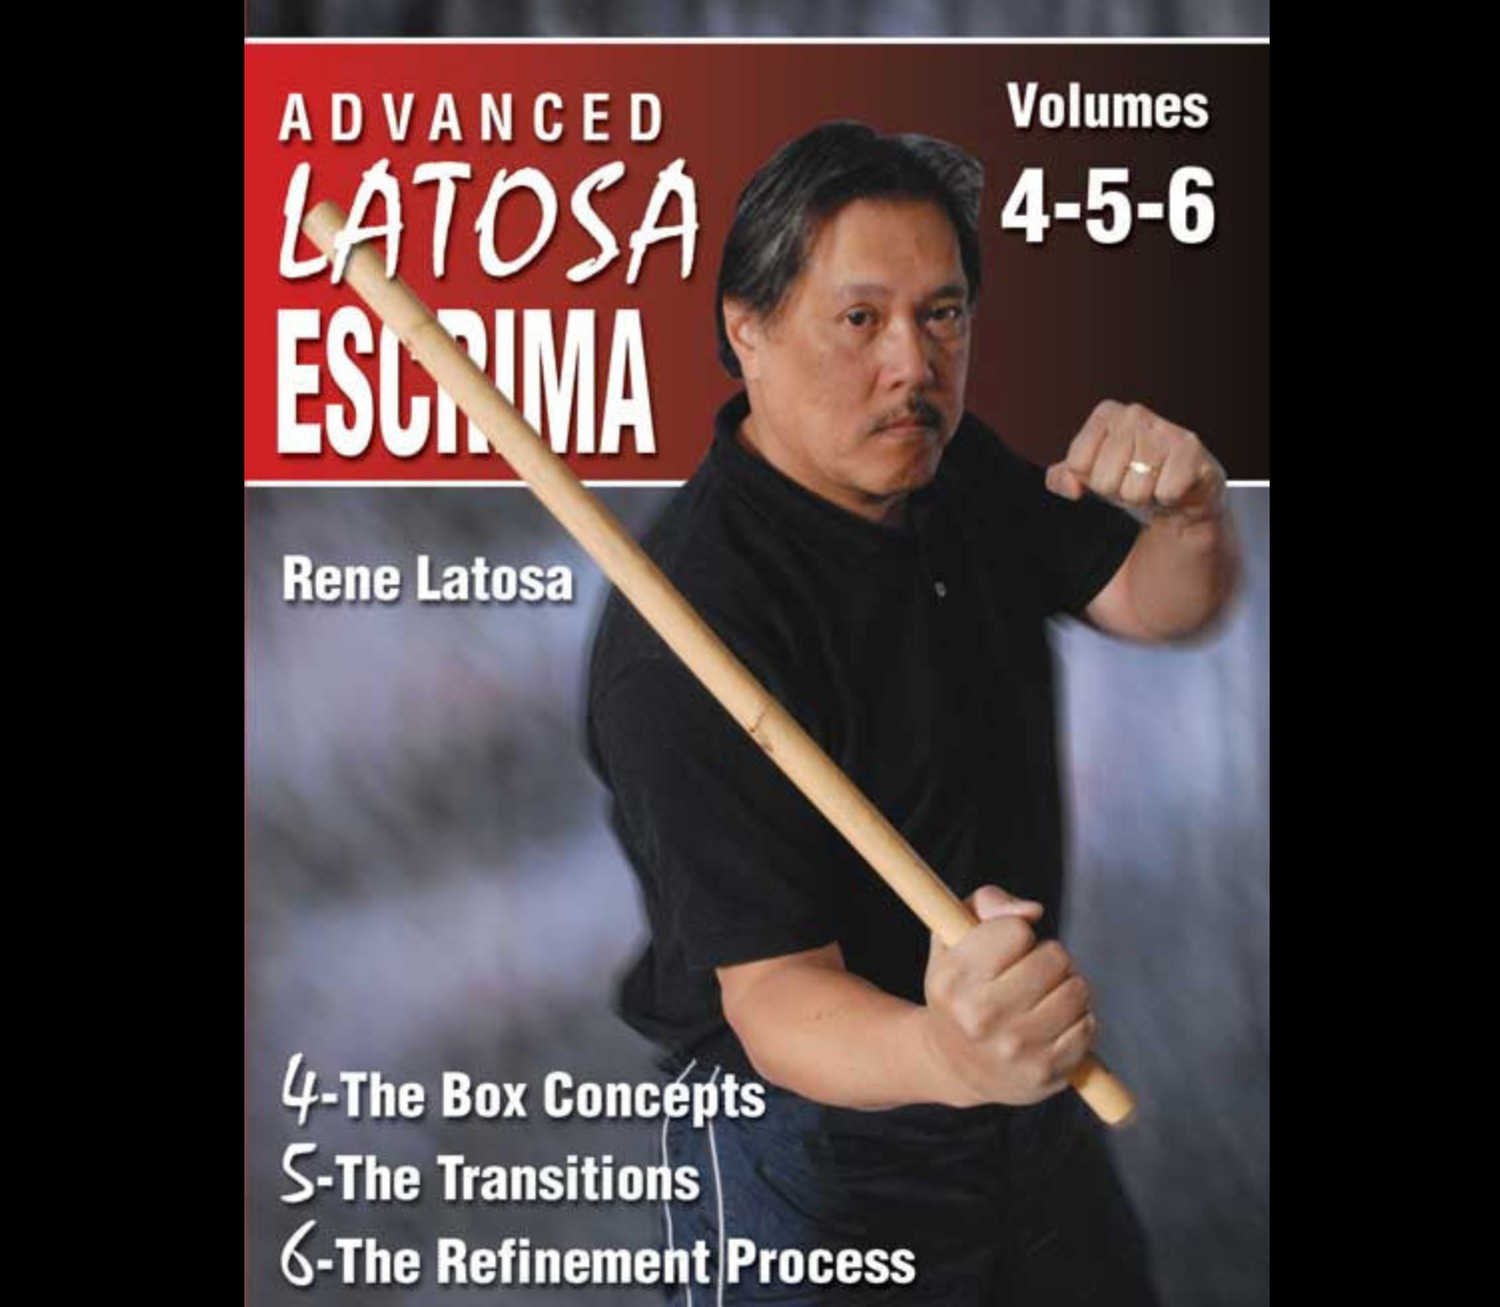 Advanced Latosa Escrima (Vol 4-6) by Rene Latosa (オンデマンド)